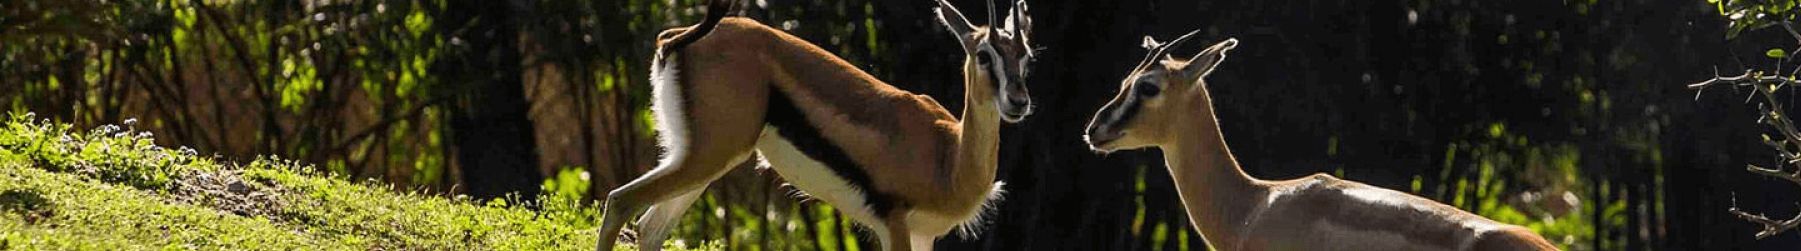 See the Gazelle at Busch Gardens Tampa Bay